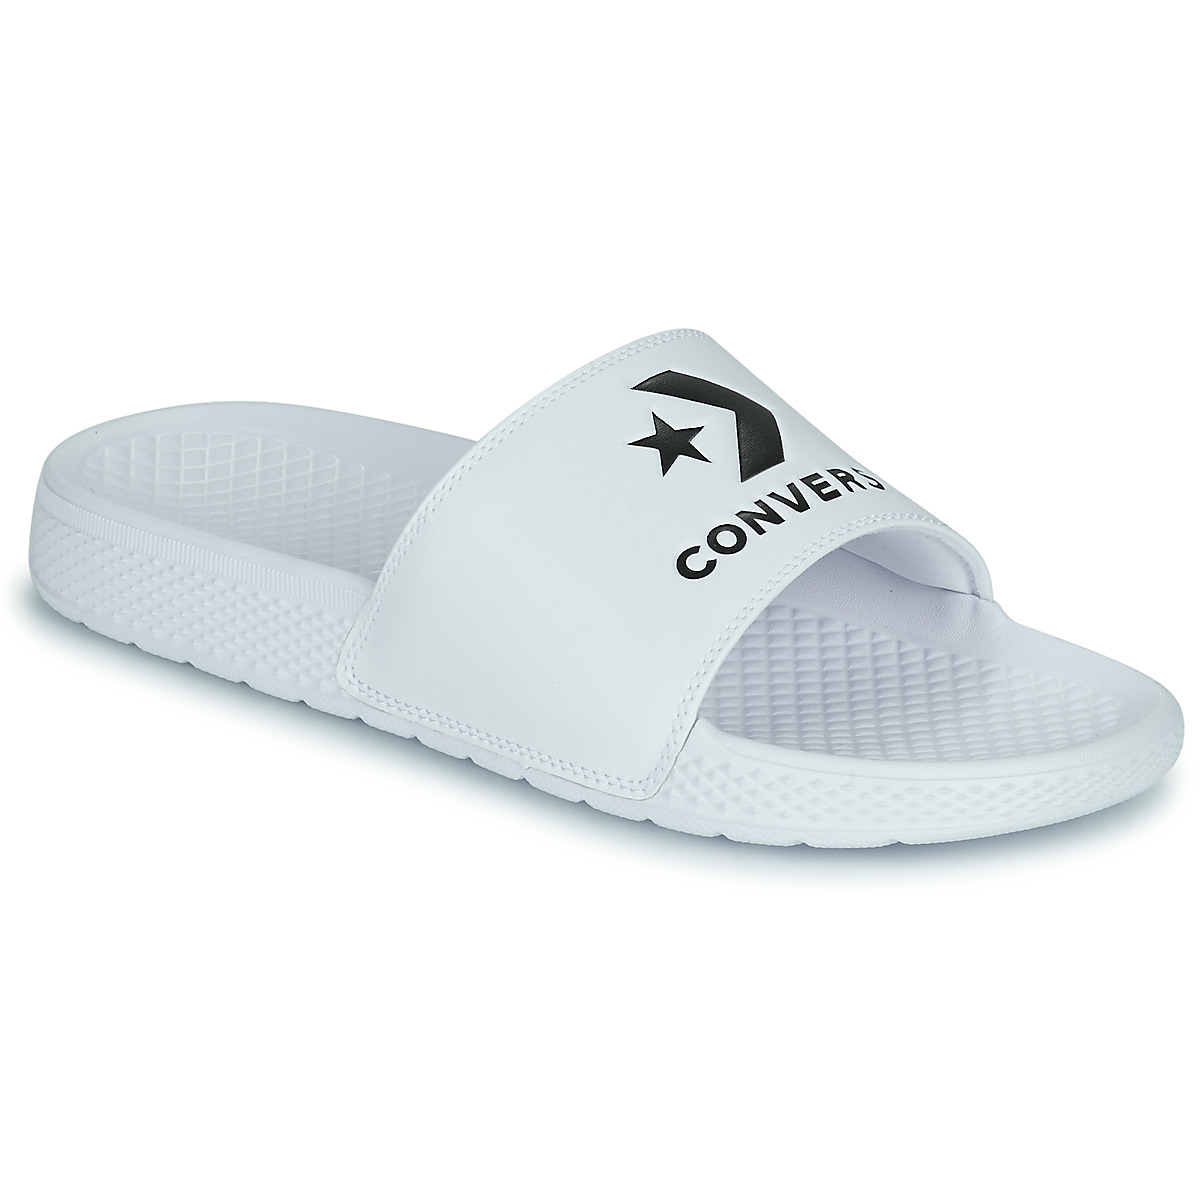 Zapatos Chanclas Converse All Star Slide Foundation Slip Blanco